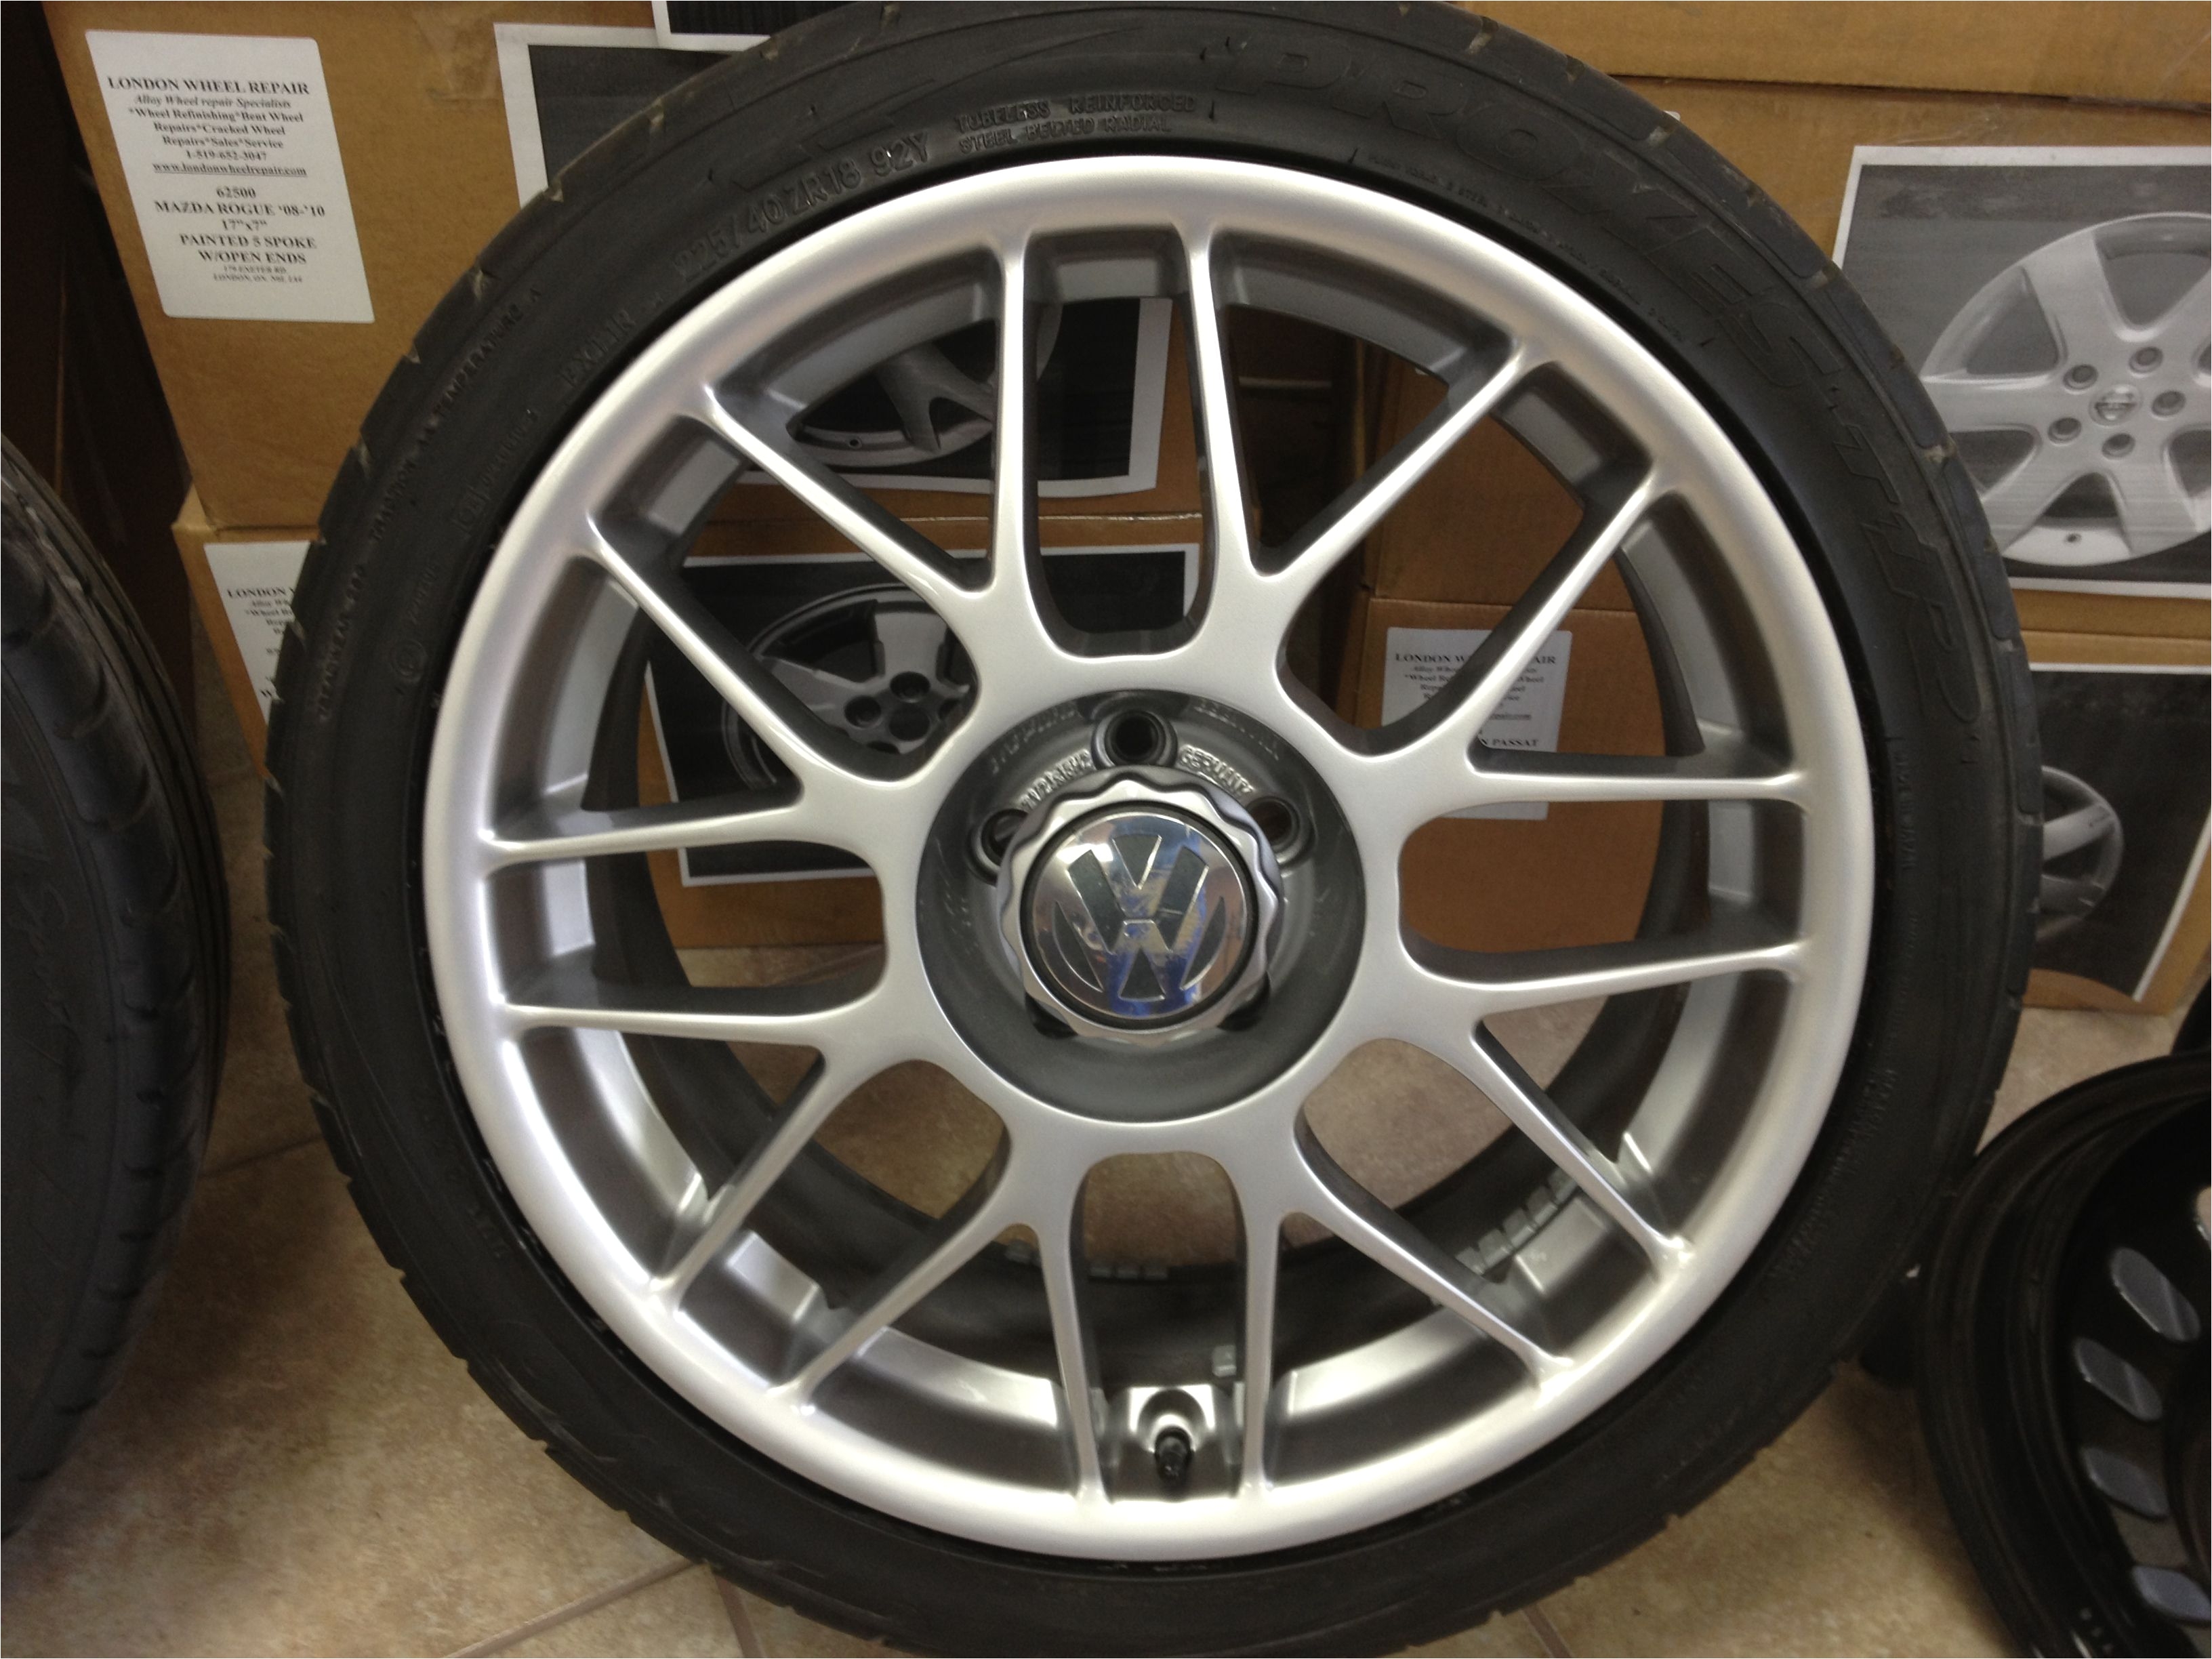 vw bbs wheels after being painted hyper silver by london wheel repair